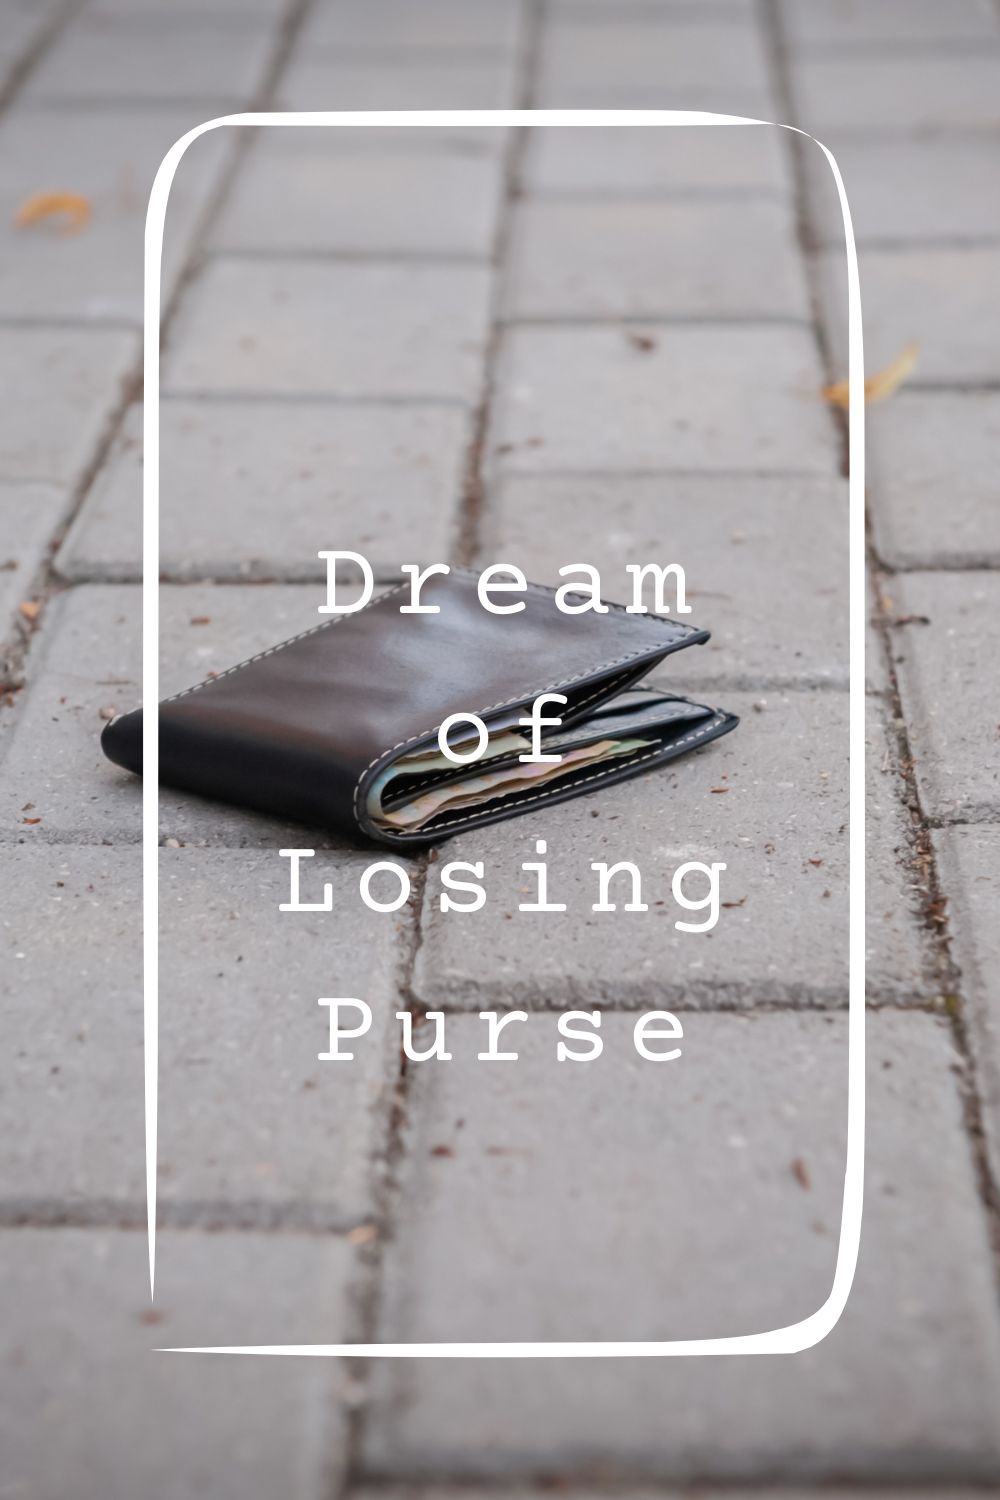 Dream of Losing Purse pin1